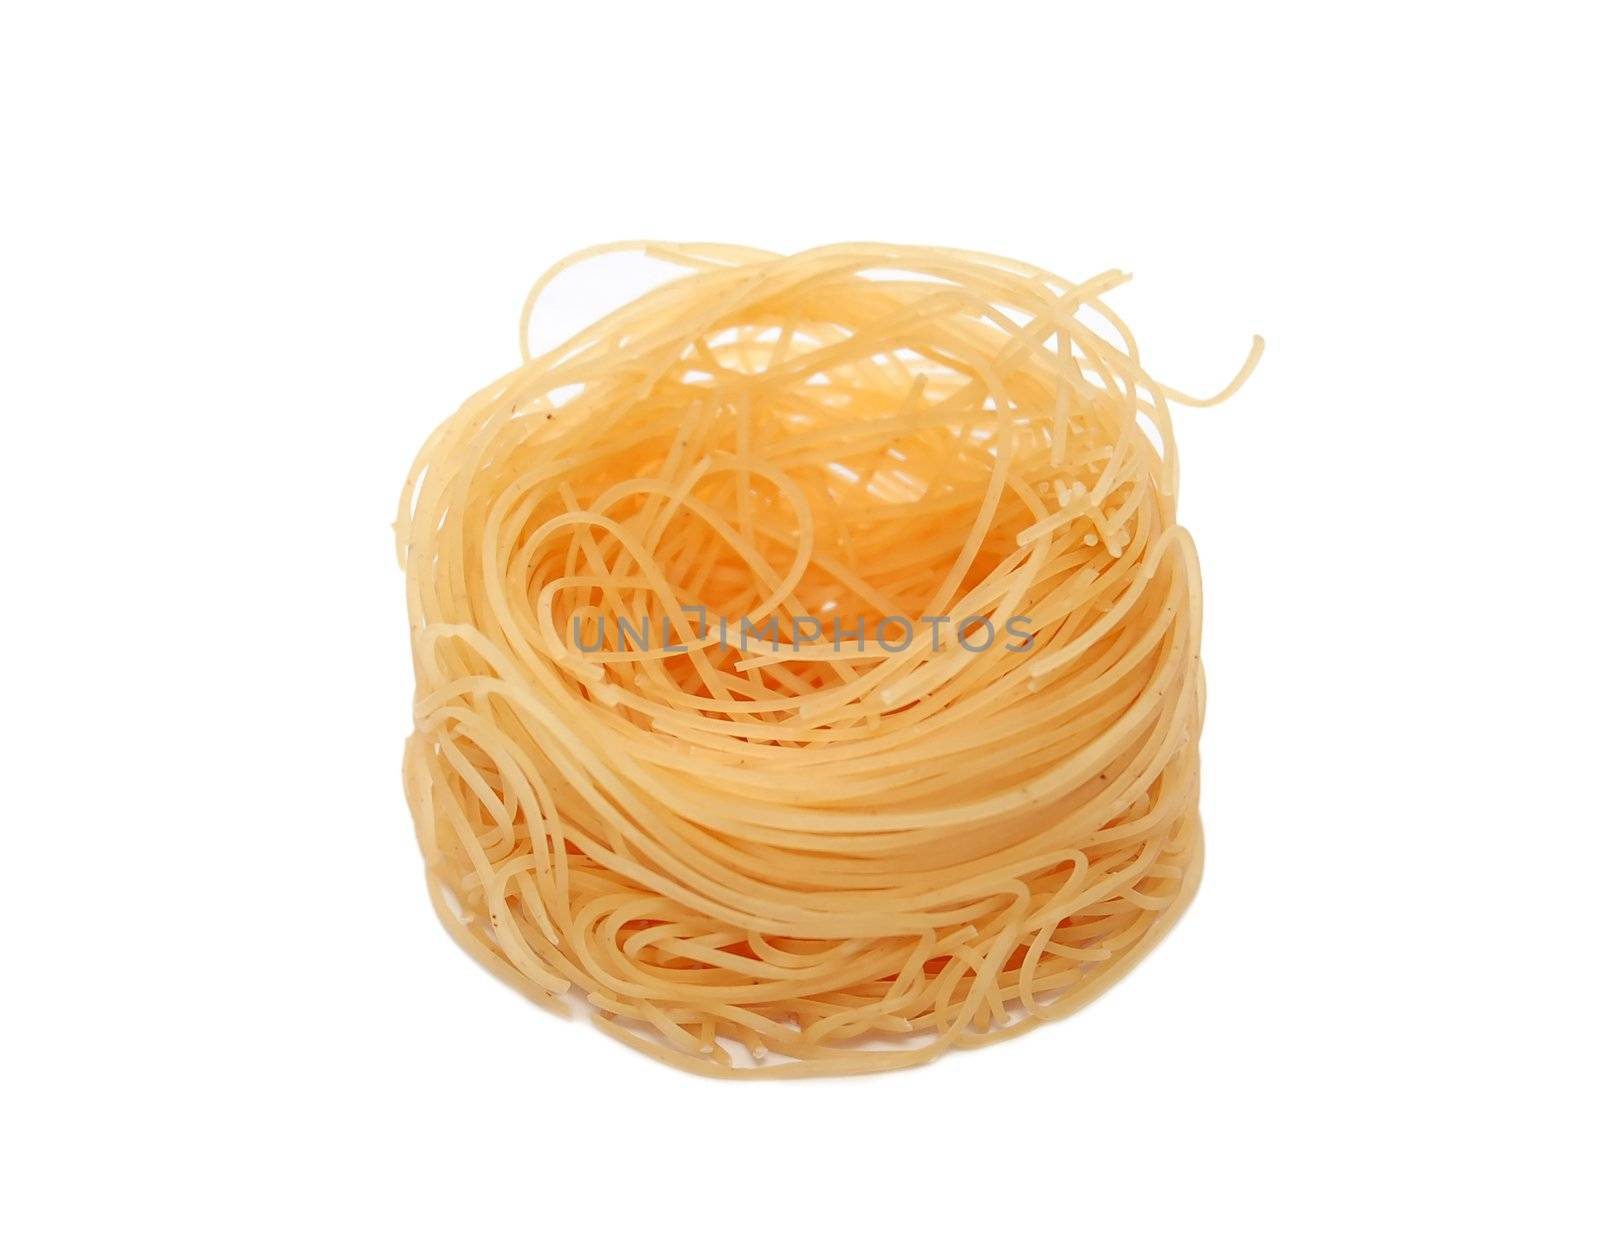 noodles by mettus